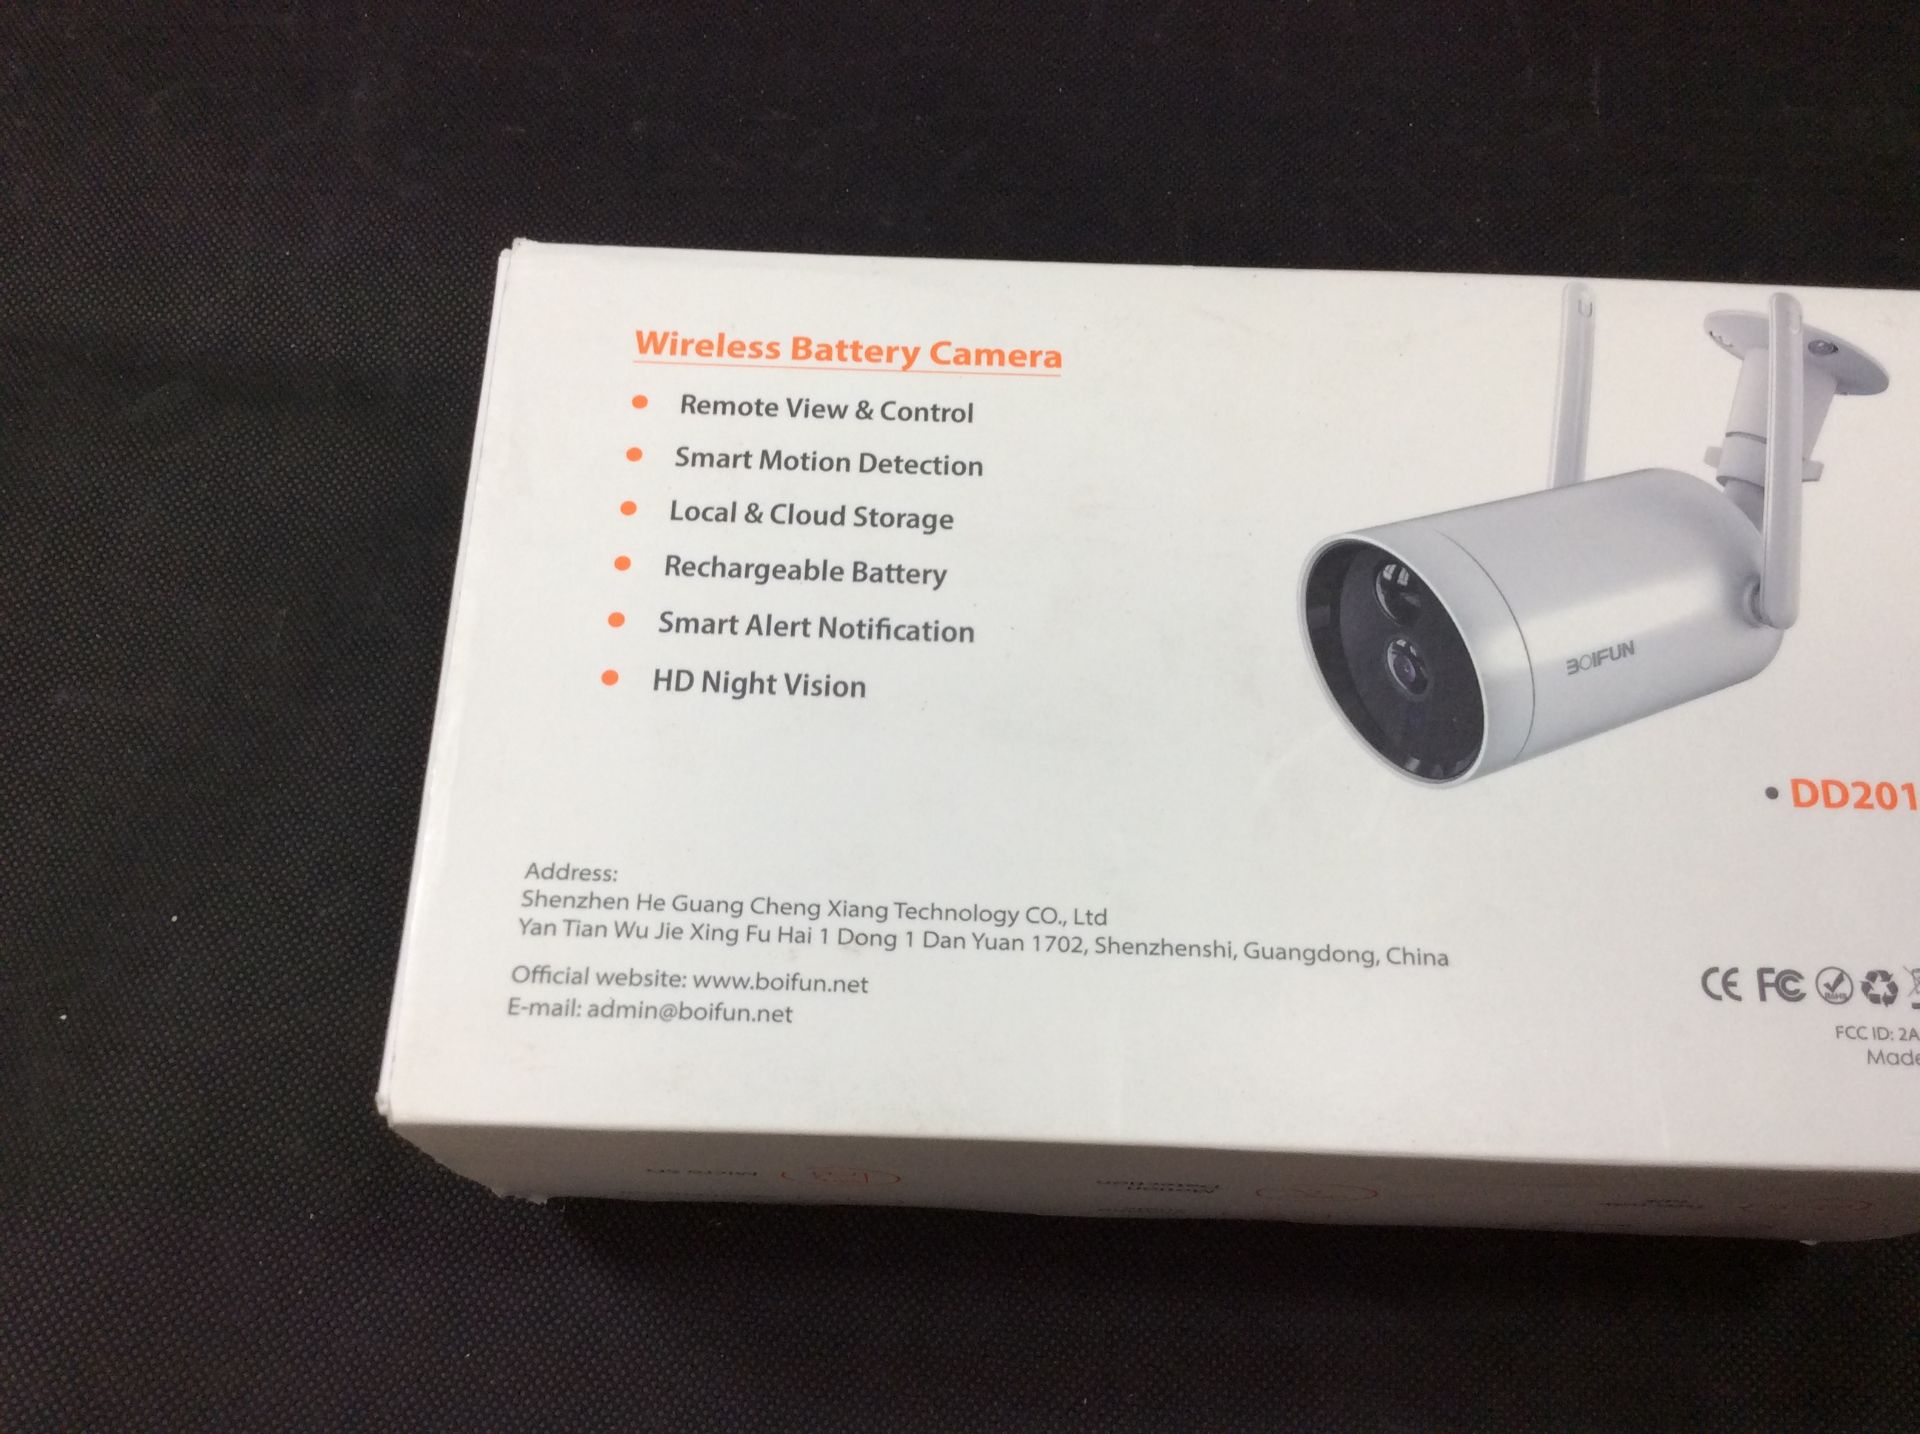 Boifun wireless security camera DD201 - Image 2 of 4